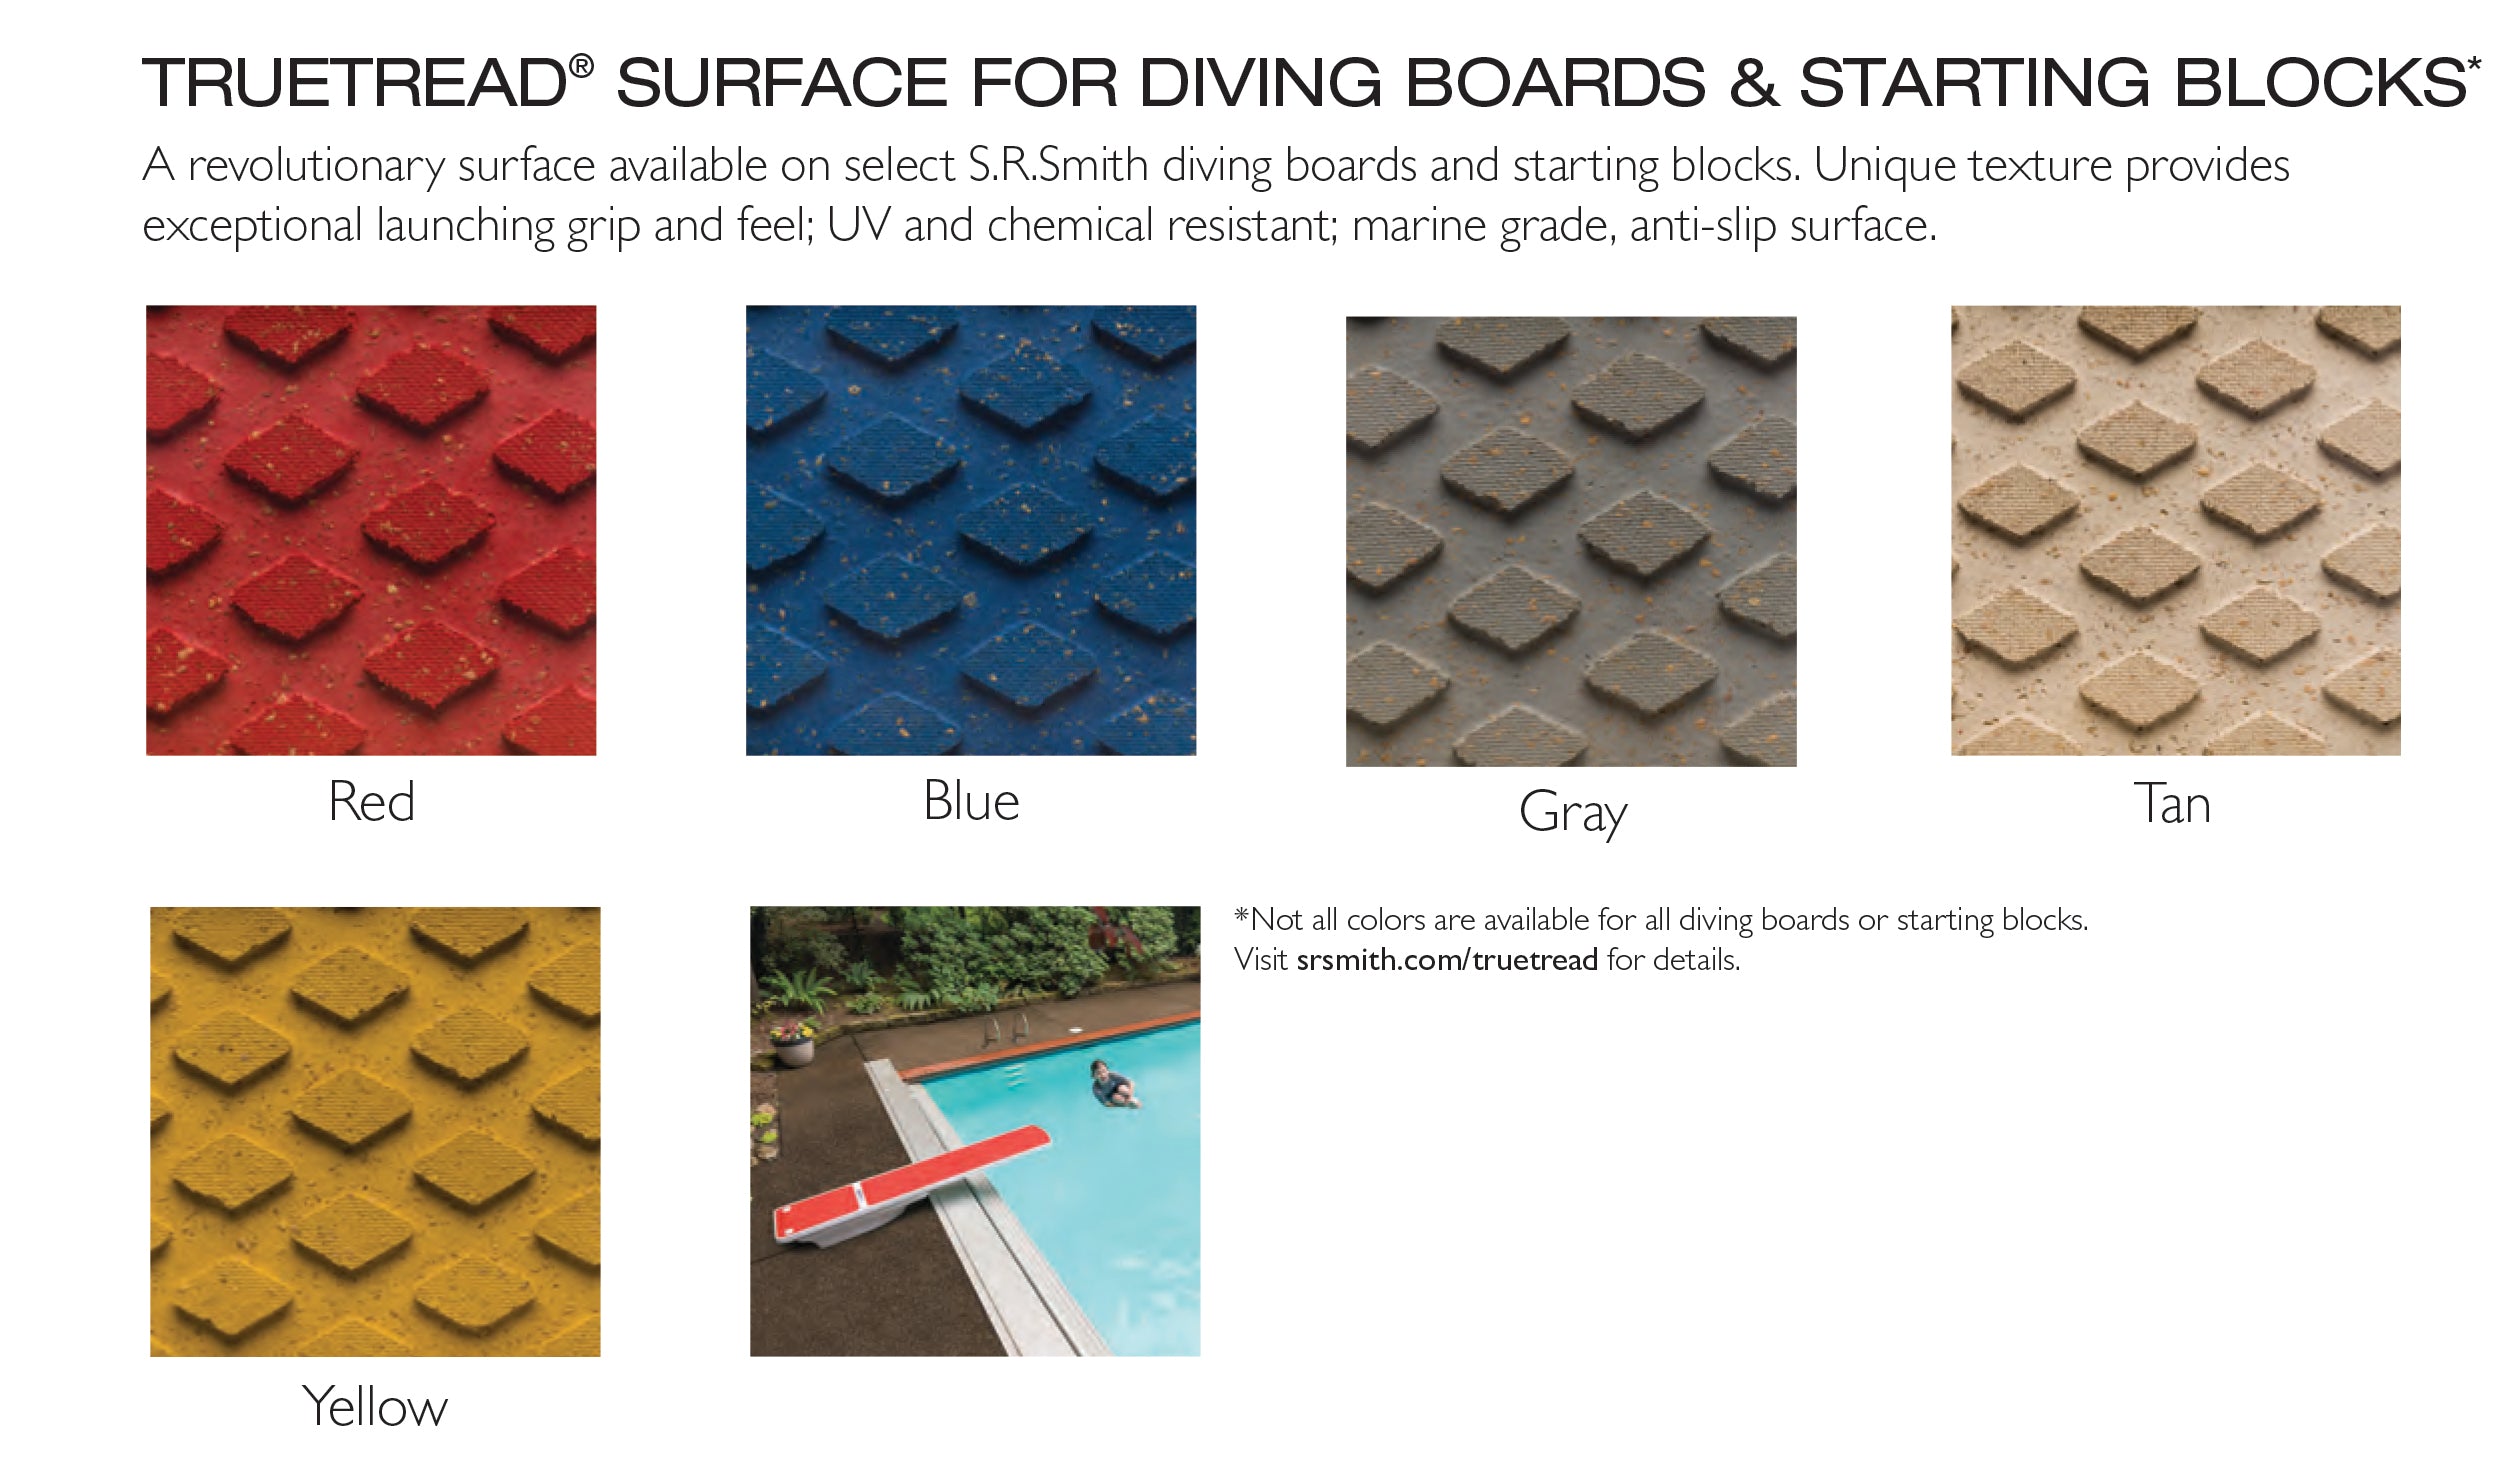 Flyte Deck II Stand With 8 Foot TrueTread Board - White Stand and Board With Tan TrueTread